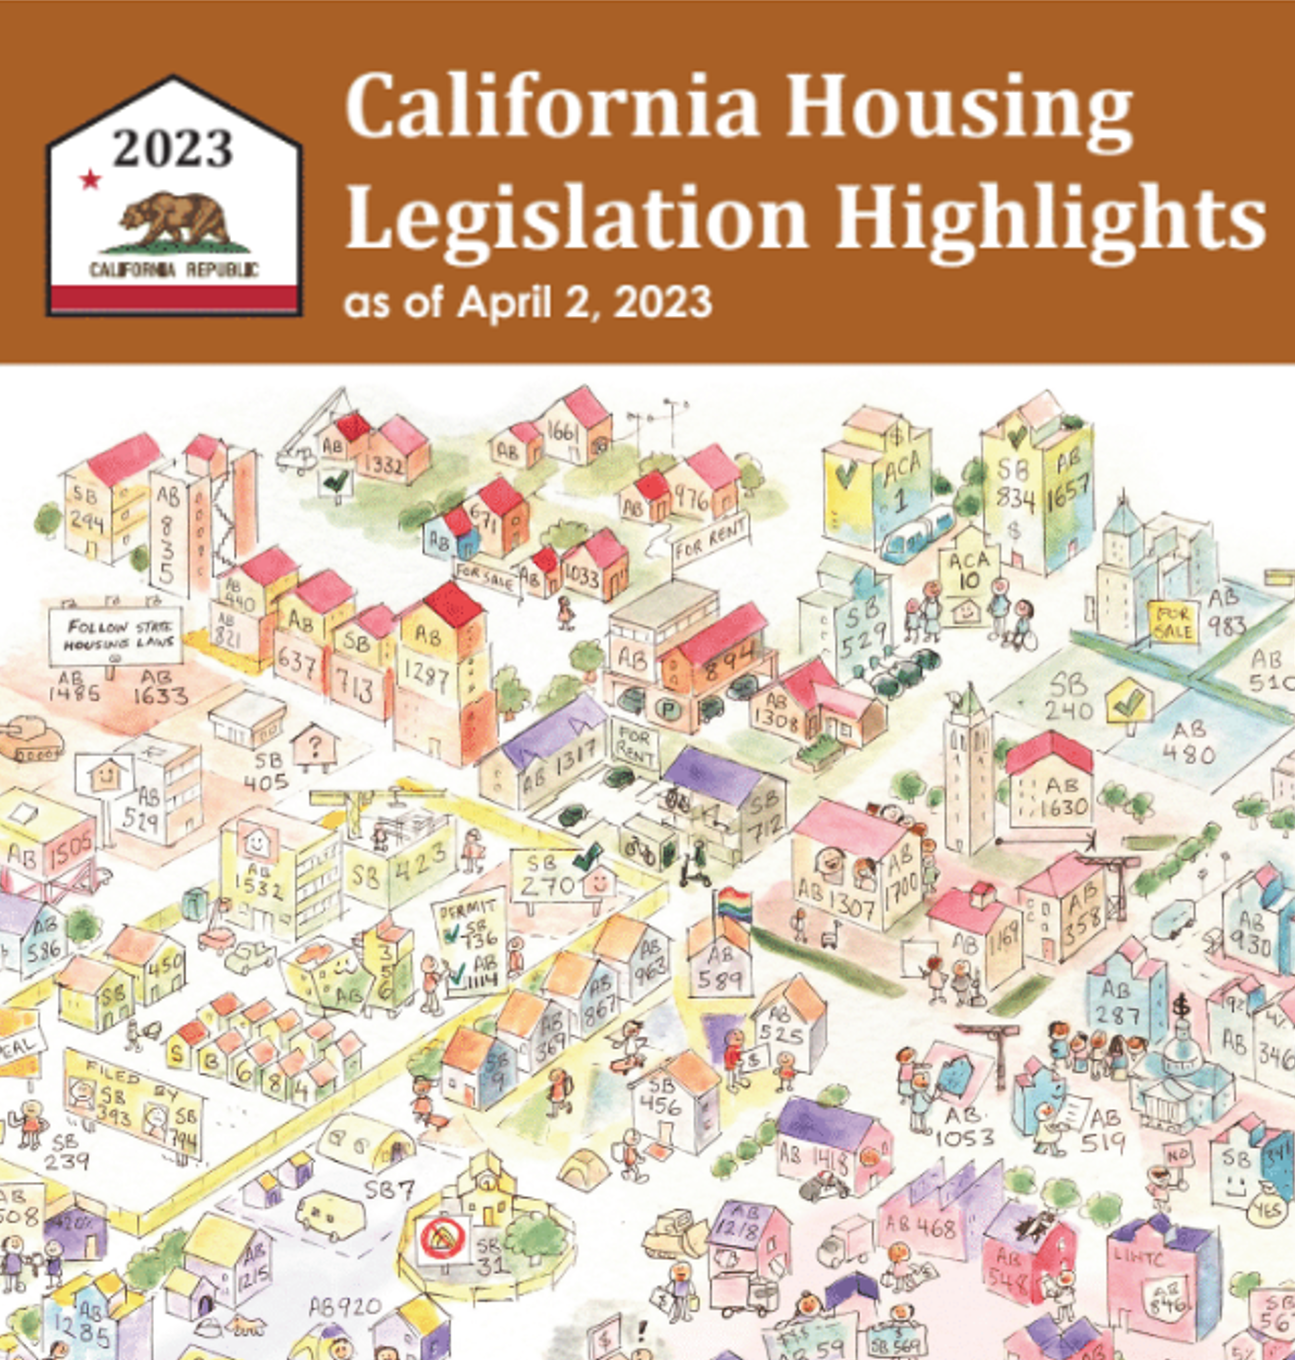 CA Housing Legislation Highlights image/link